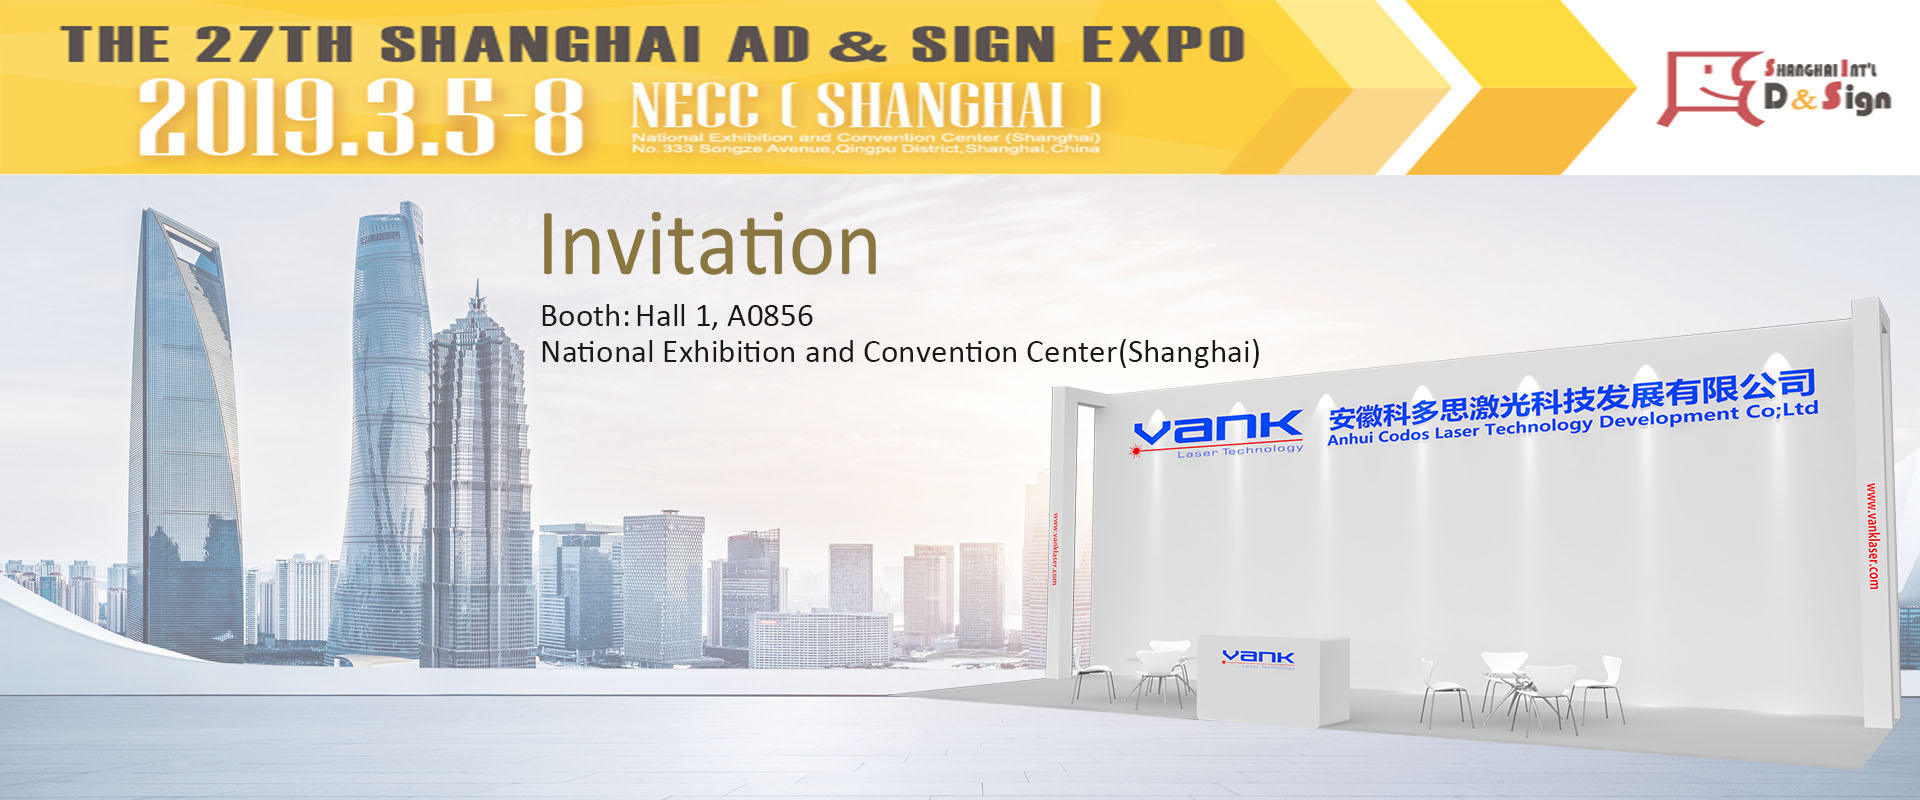 Shanghai AD&SIGN EXPO 